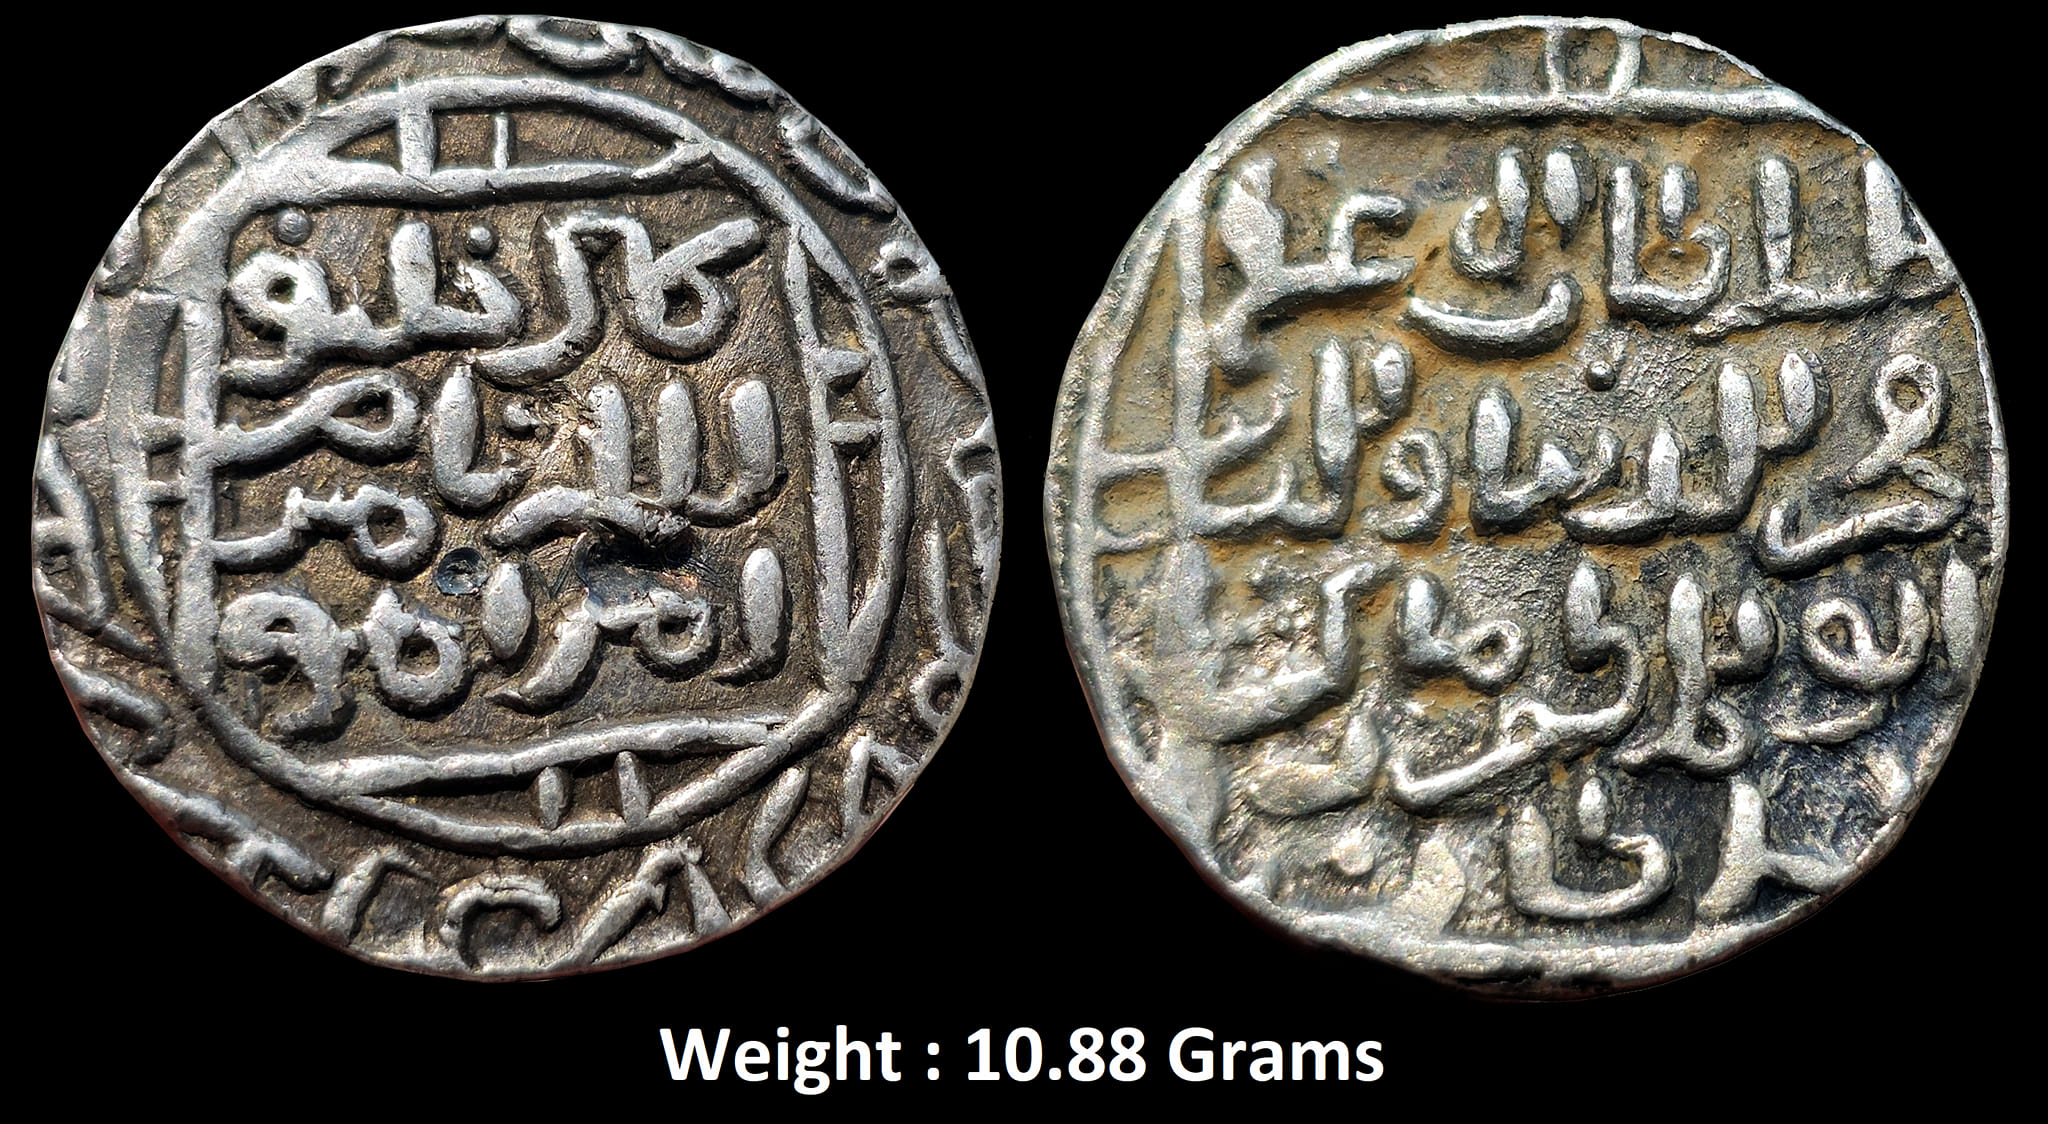 Bengal Sultanate : Fakhr ud-din Mubarak (AH 734-750/1334-1349 AD), Hadrat Jalal Sunargaon Mint, Silver Tanka, Obv: al-sultan al-a'zam Fakhr ud-dunya wa'l din A'bul Muzaffar Mubarak Shah al-sultan, Rev: yamin al-khilafat nasir amir al-muminin,
Weight : 10.88 Grams ; (G&G # B136), Rare